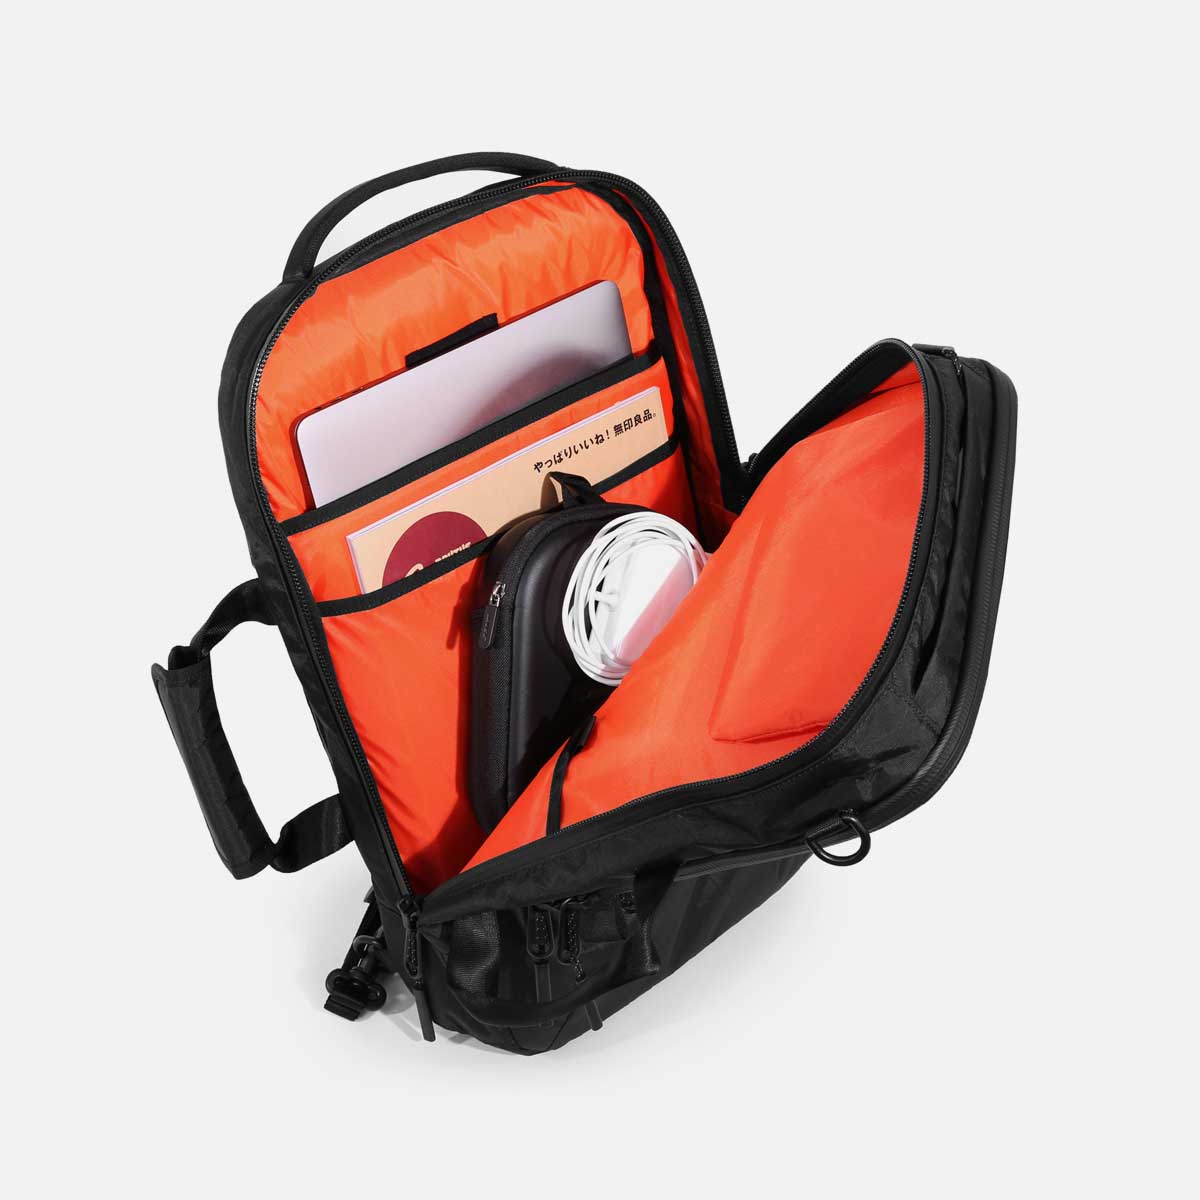 Flight Pack 2 X-Pac - Black — Aer | Modern gym bags, travel 